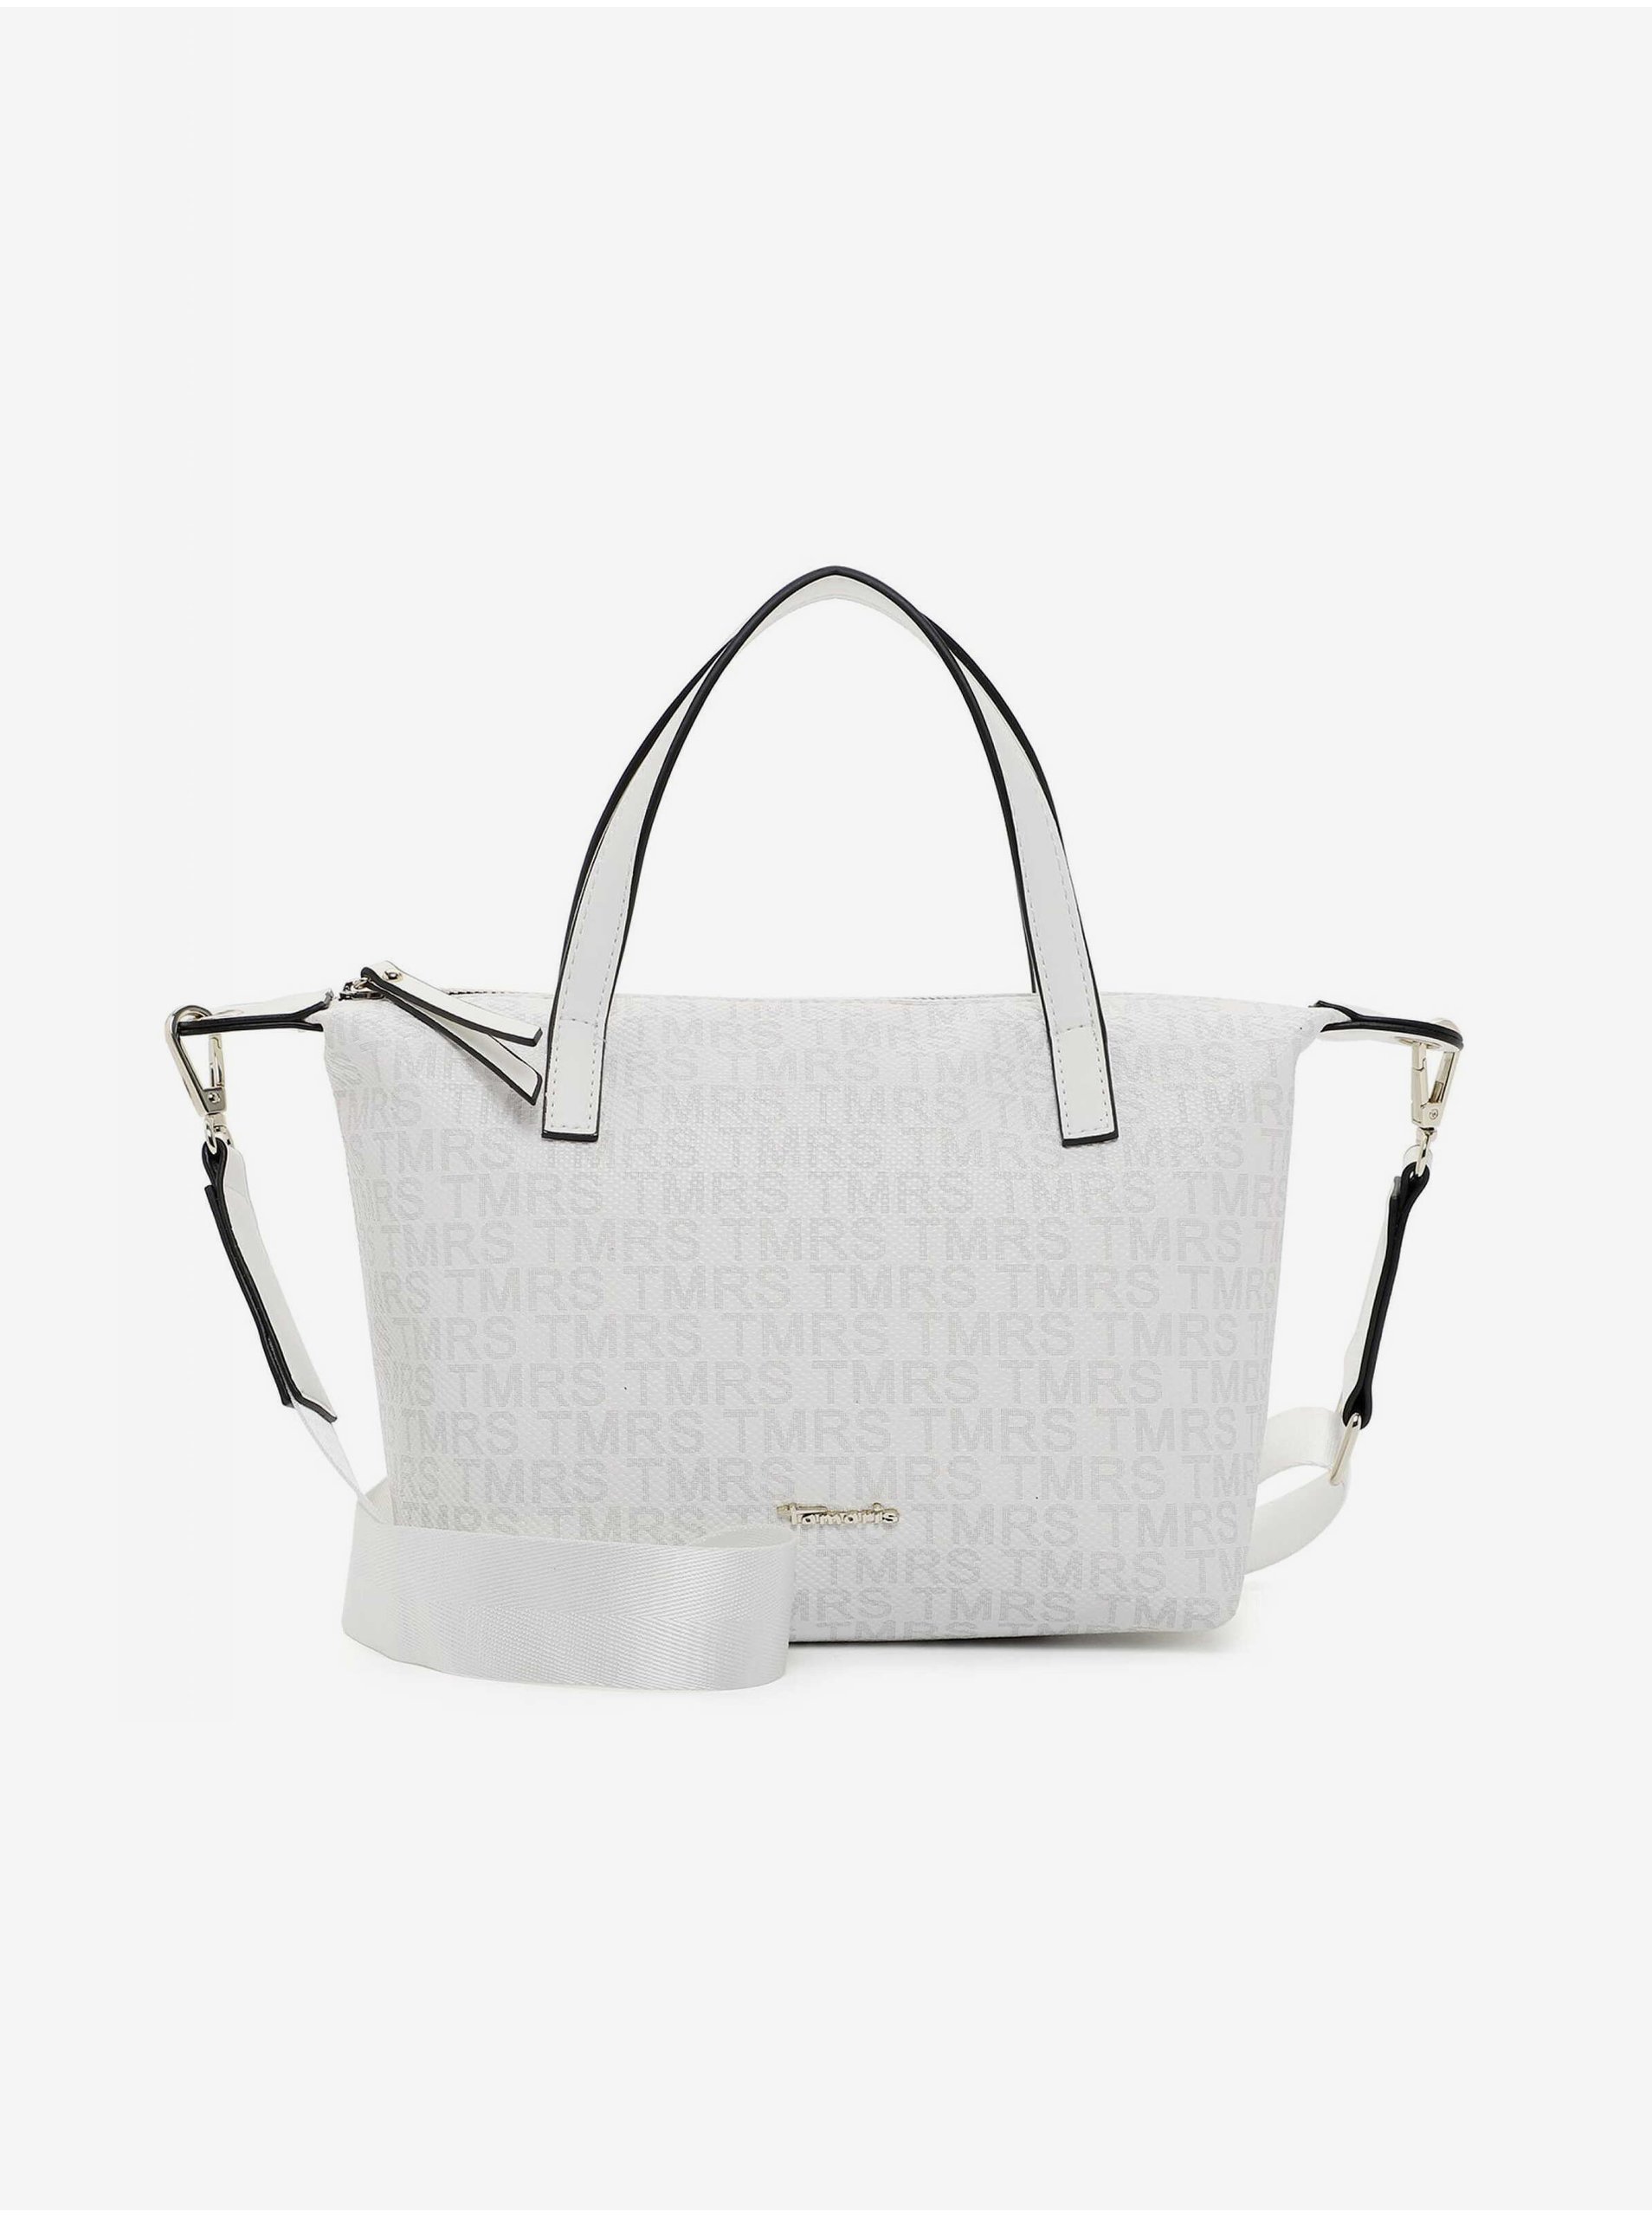 White patterned crossbody handbag Tamaris Grace - Women - šedá